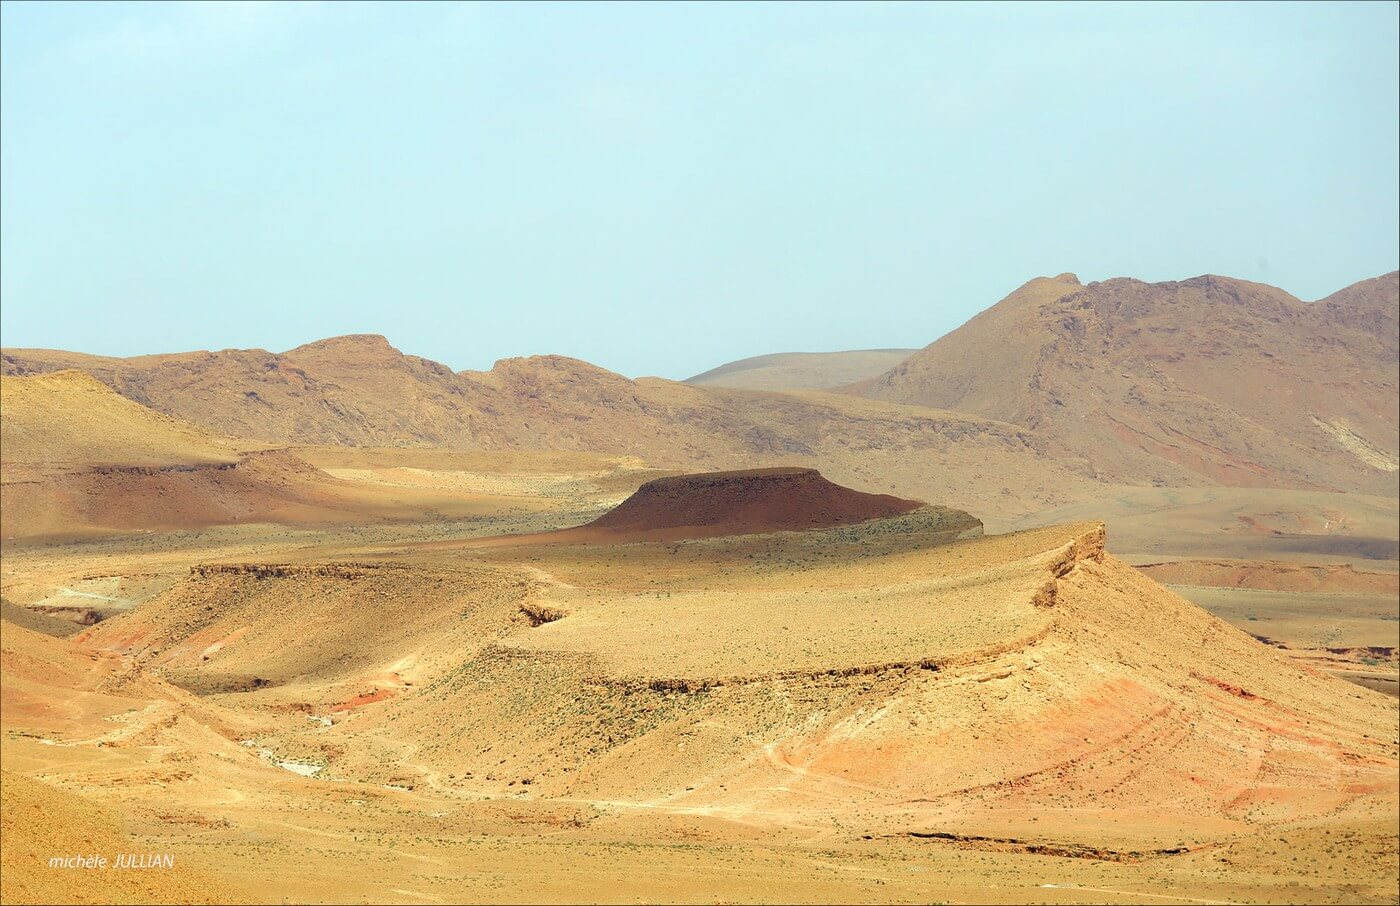 désert marocain en pays berbère